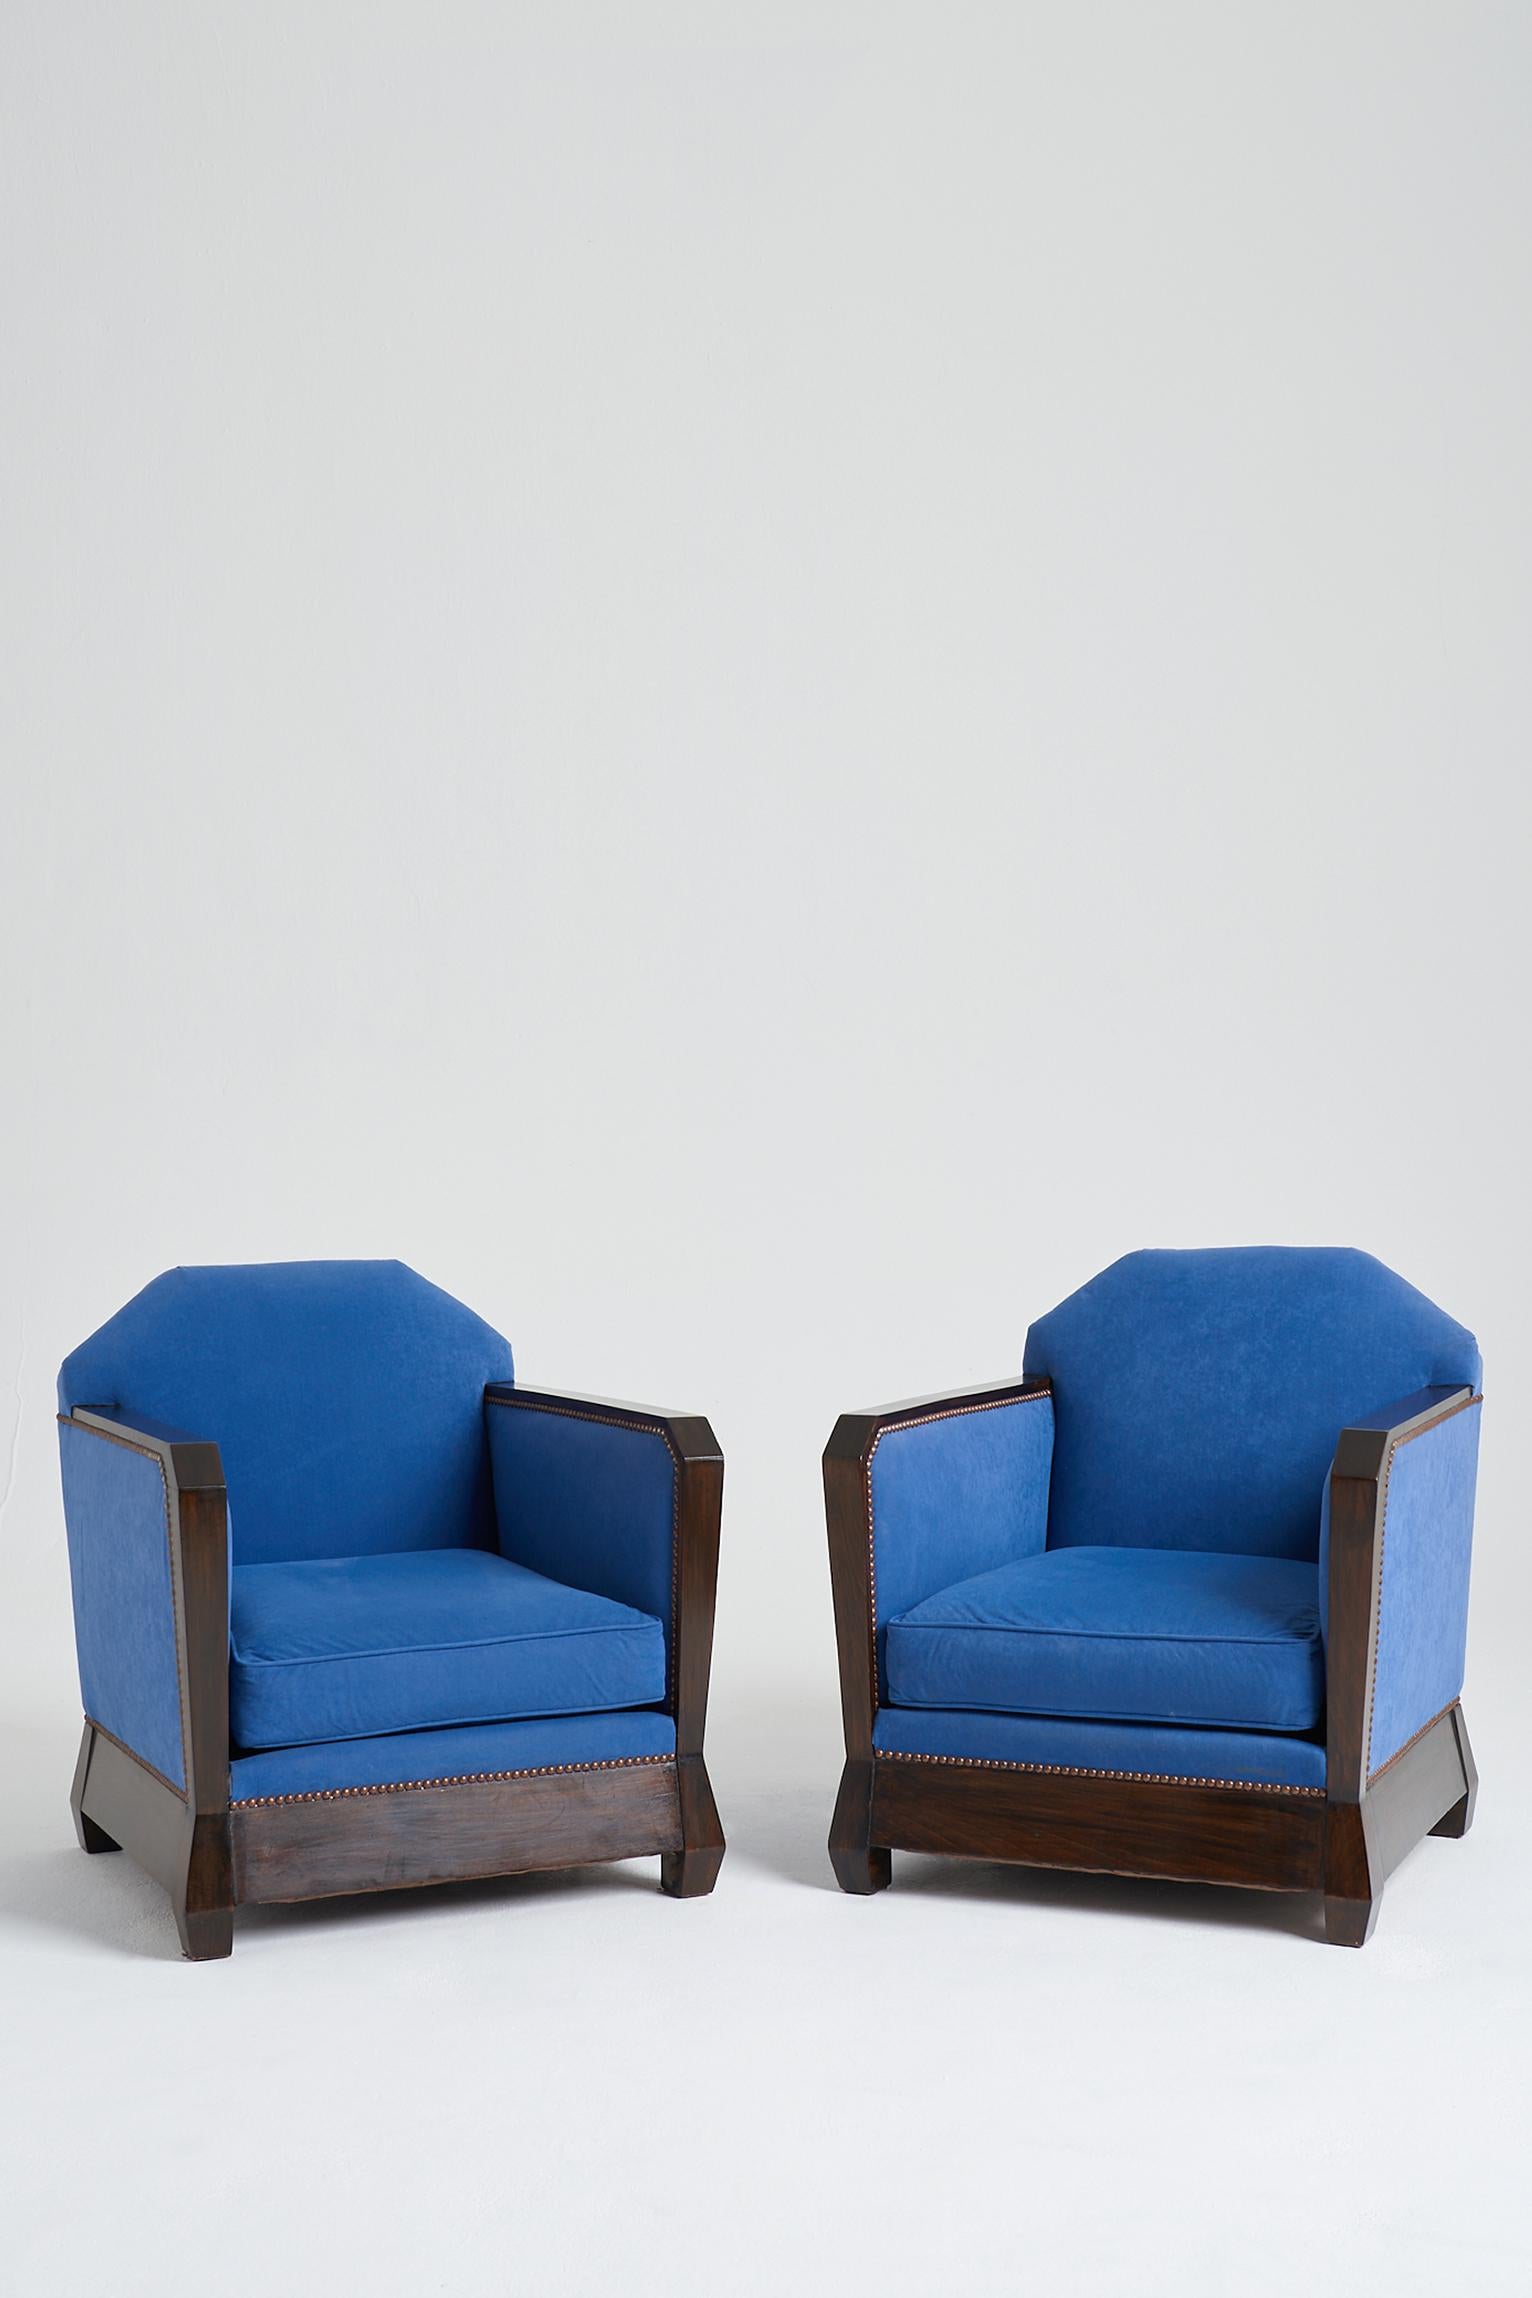 A pair of Art Deco beechwood armchairs,
France, Circa 1930.